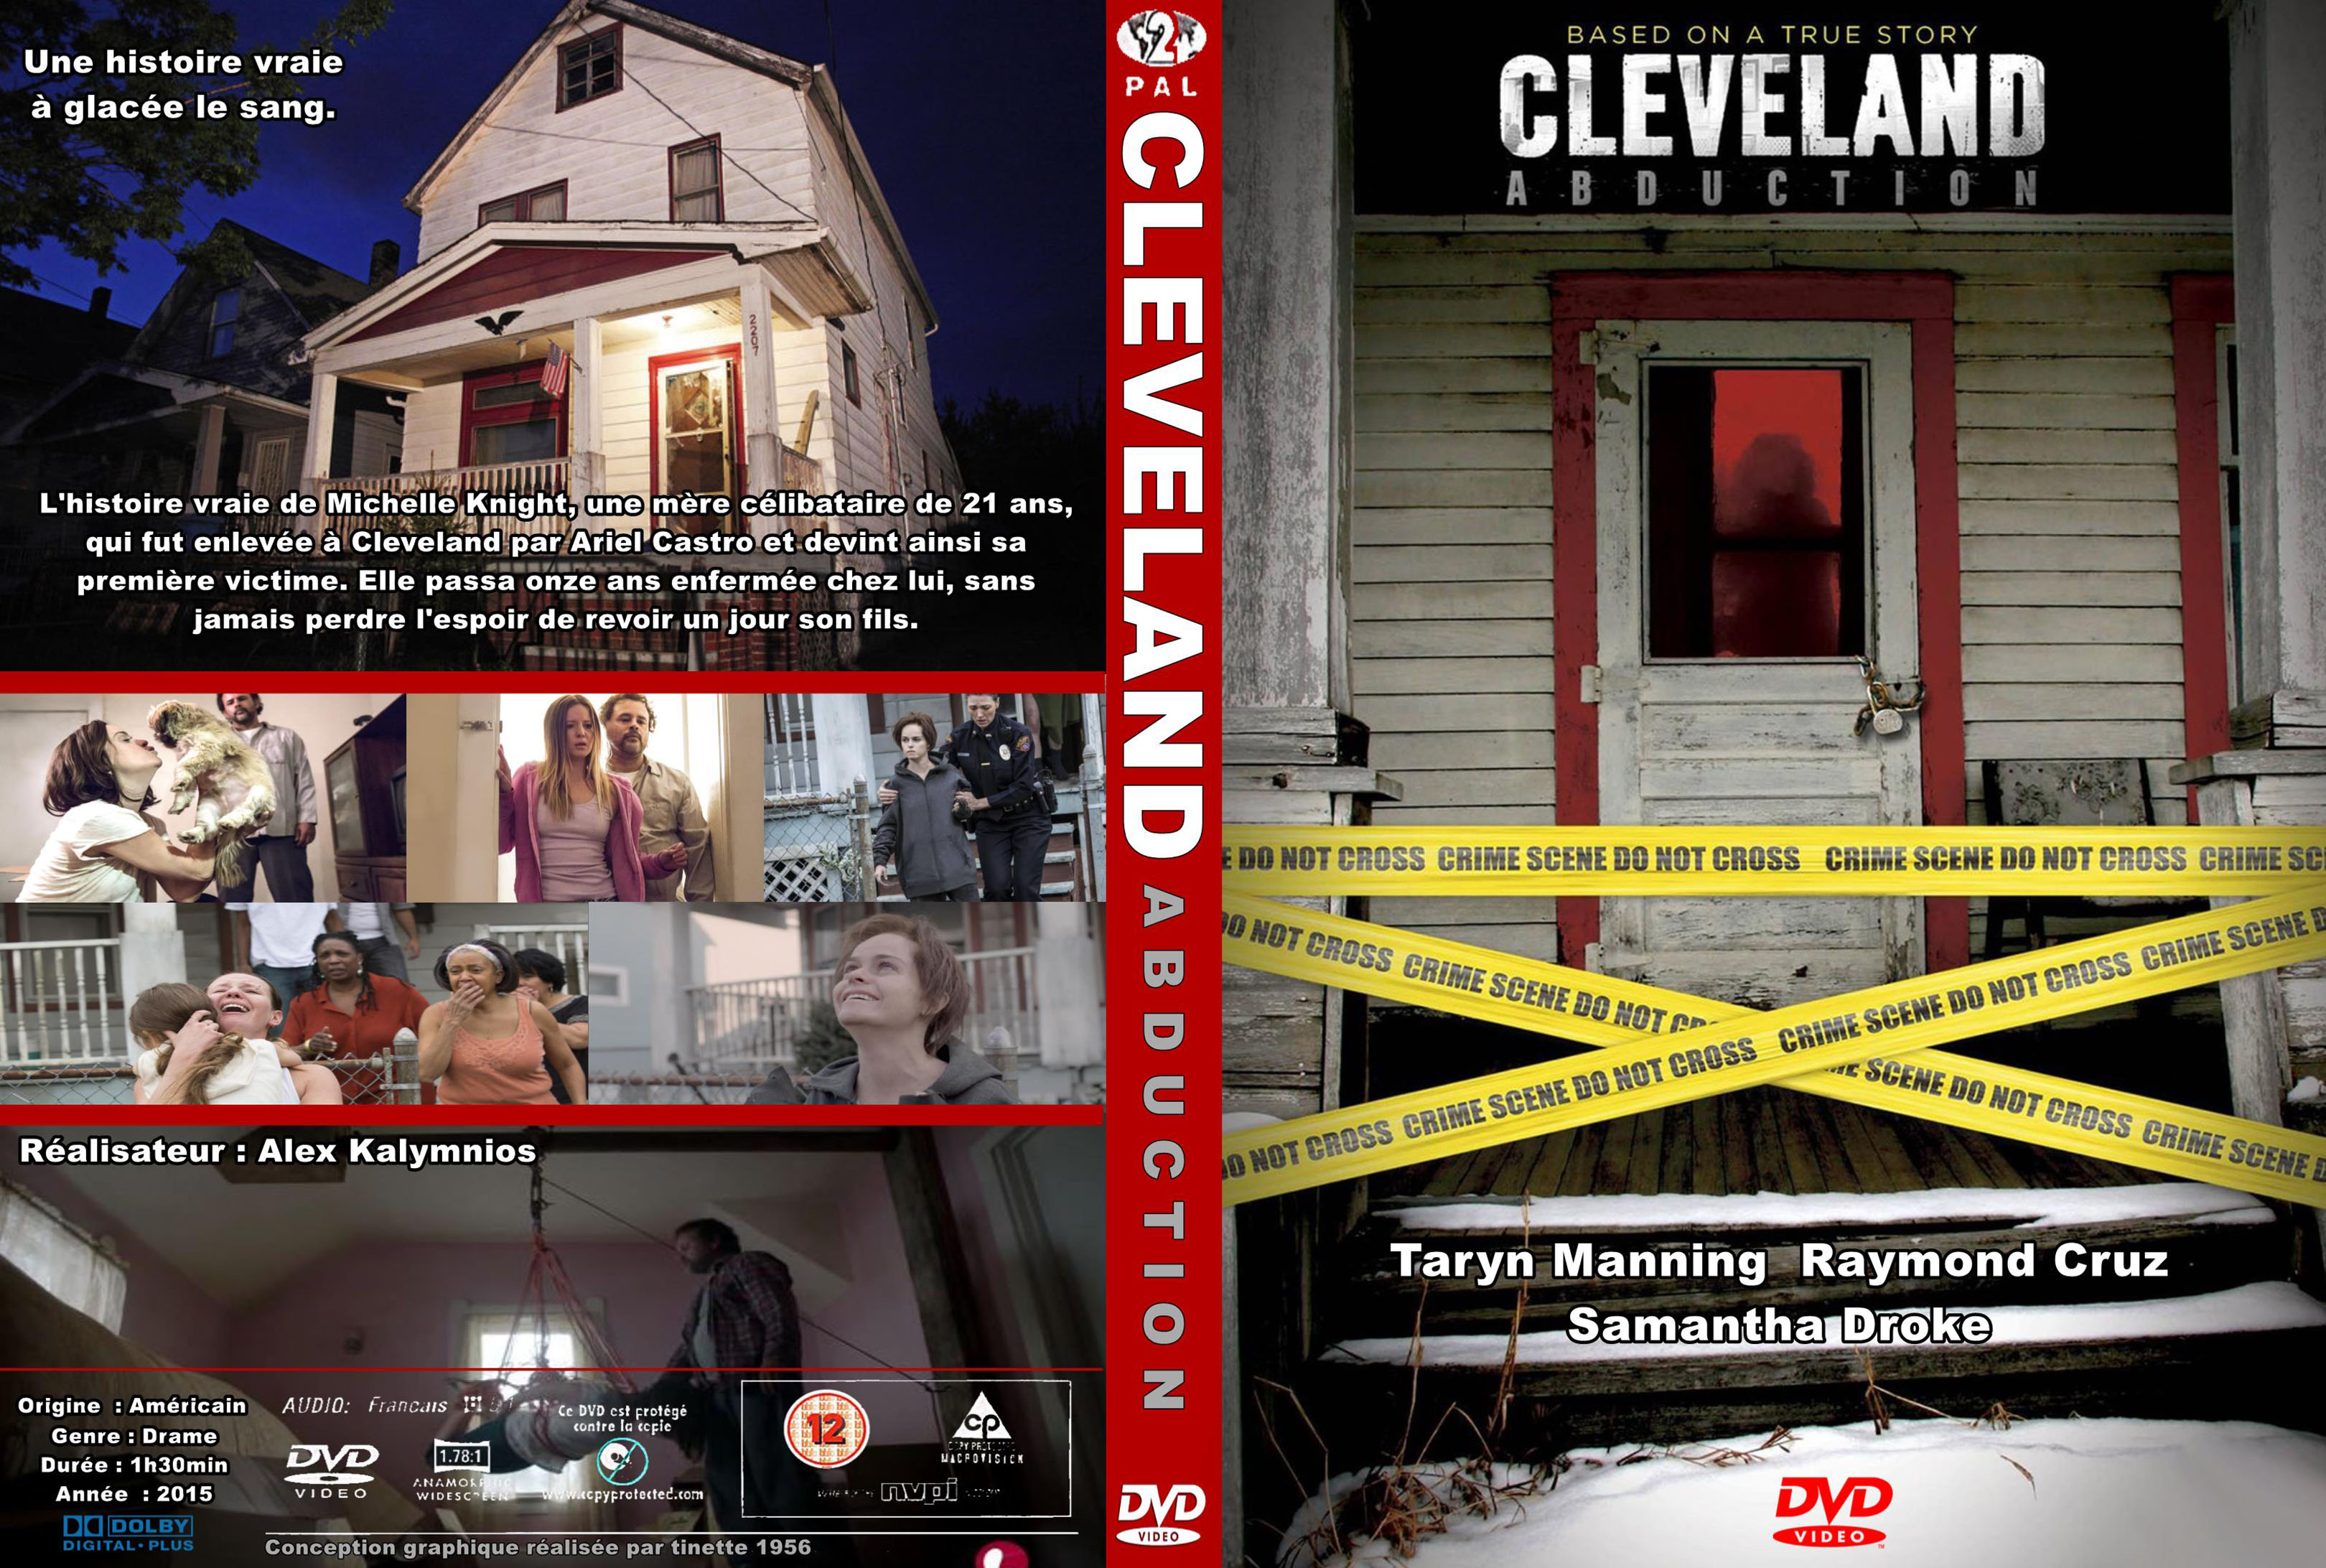 Jaquette DVD Cleveland abduction custom